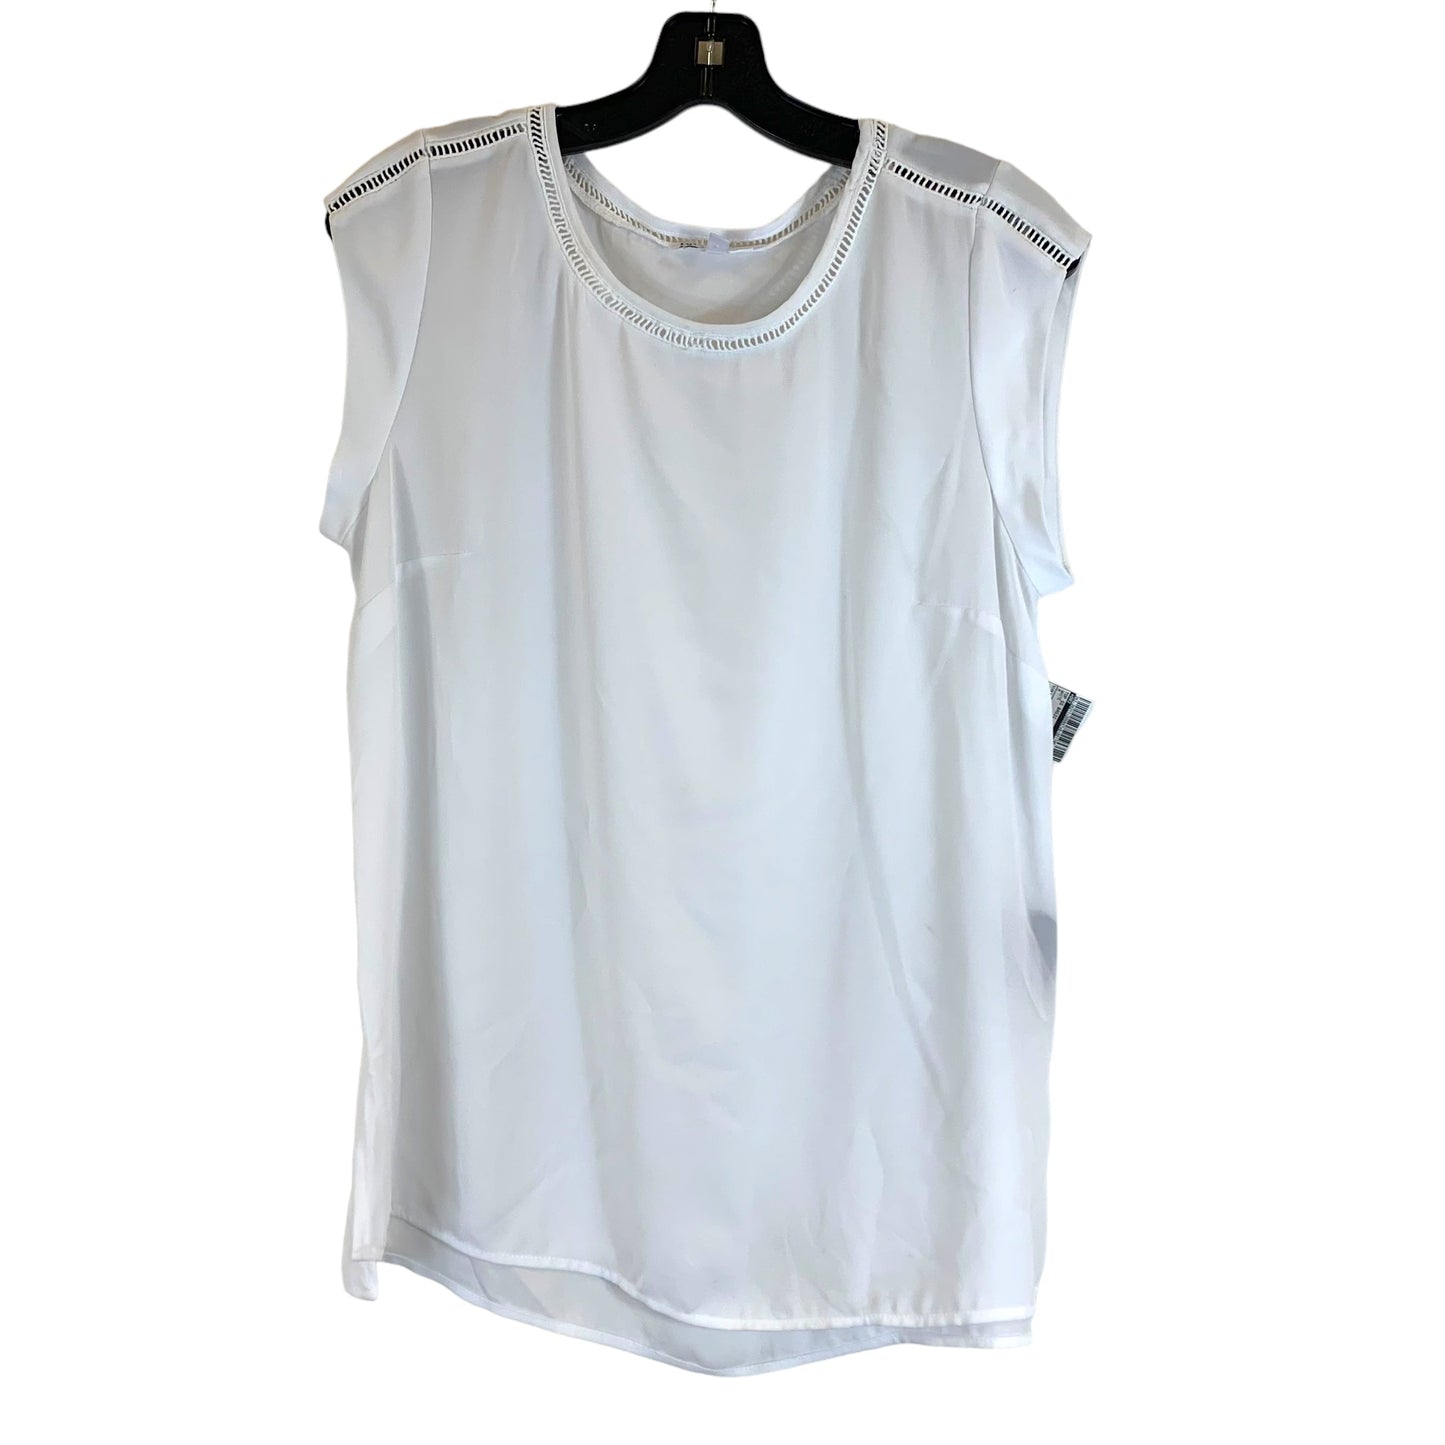 White Top Short Sleeve Basic Dr2, Size M